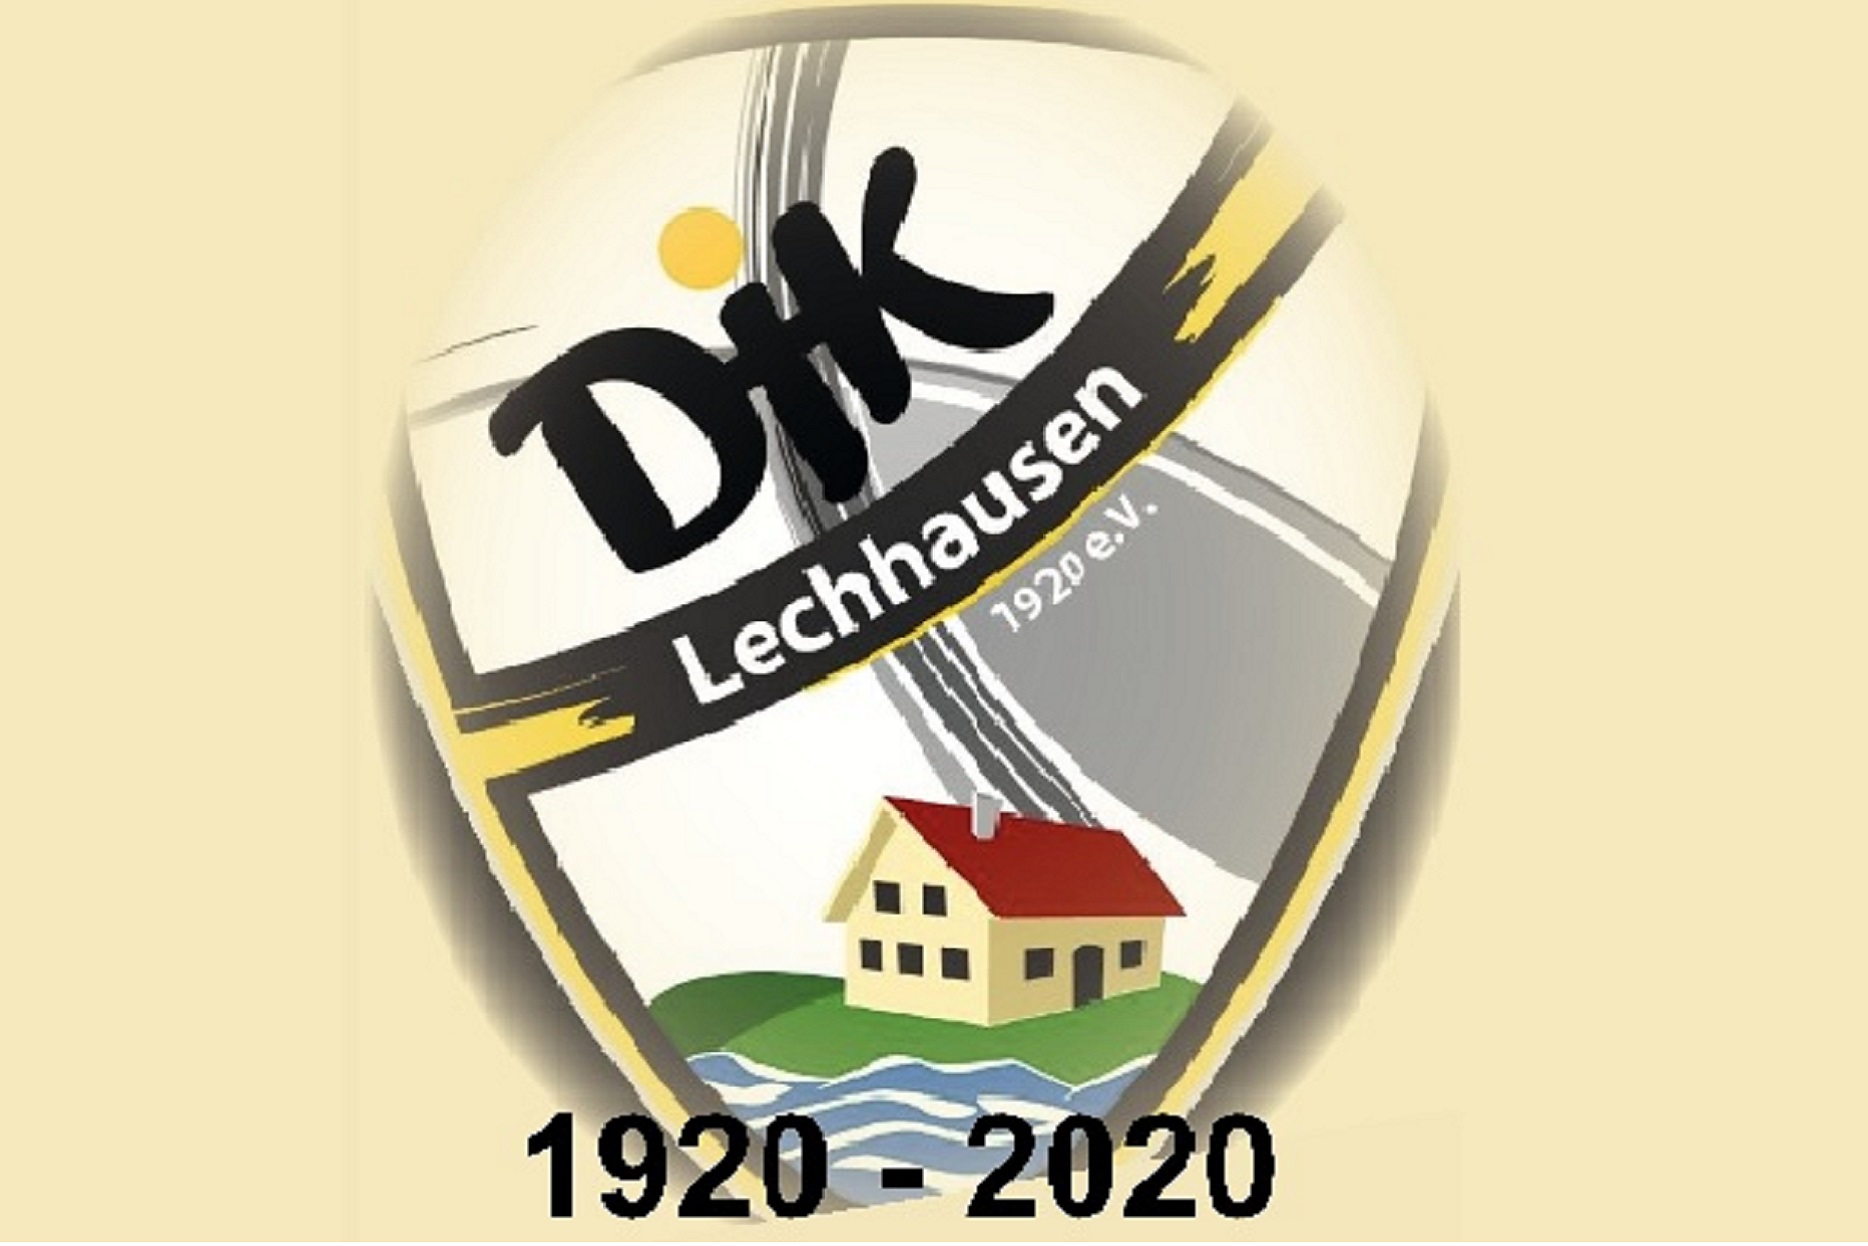 100 Jahre DJK Lechhausen